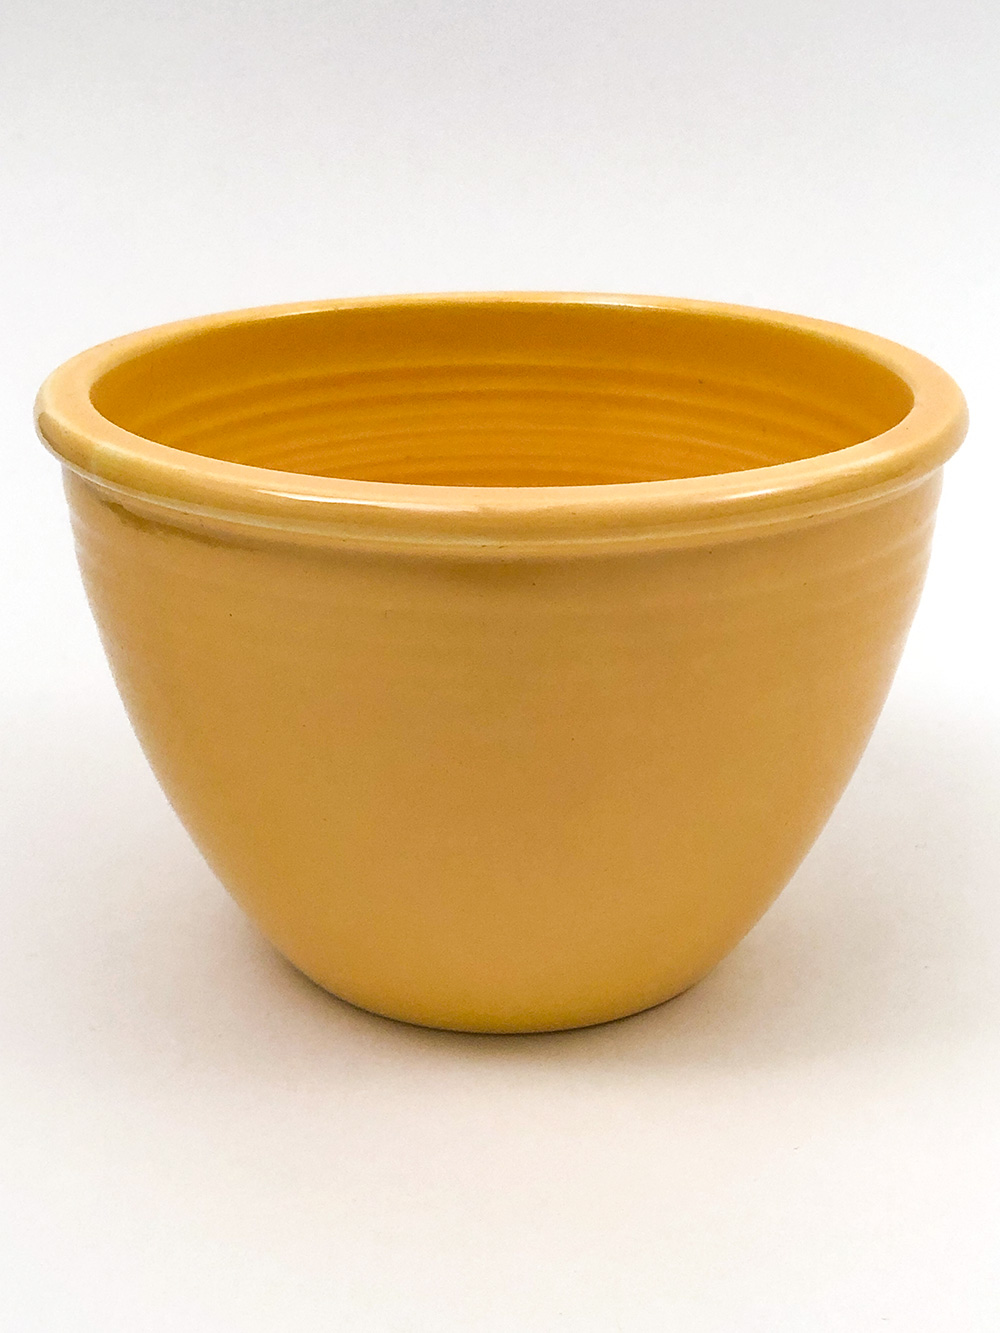 Number 2 yellow vintage fiesta nesting bowl inside bottom rings